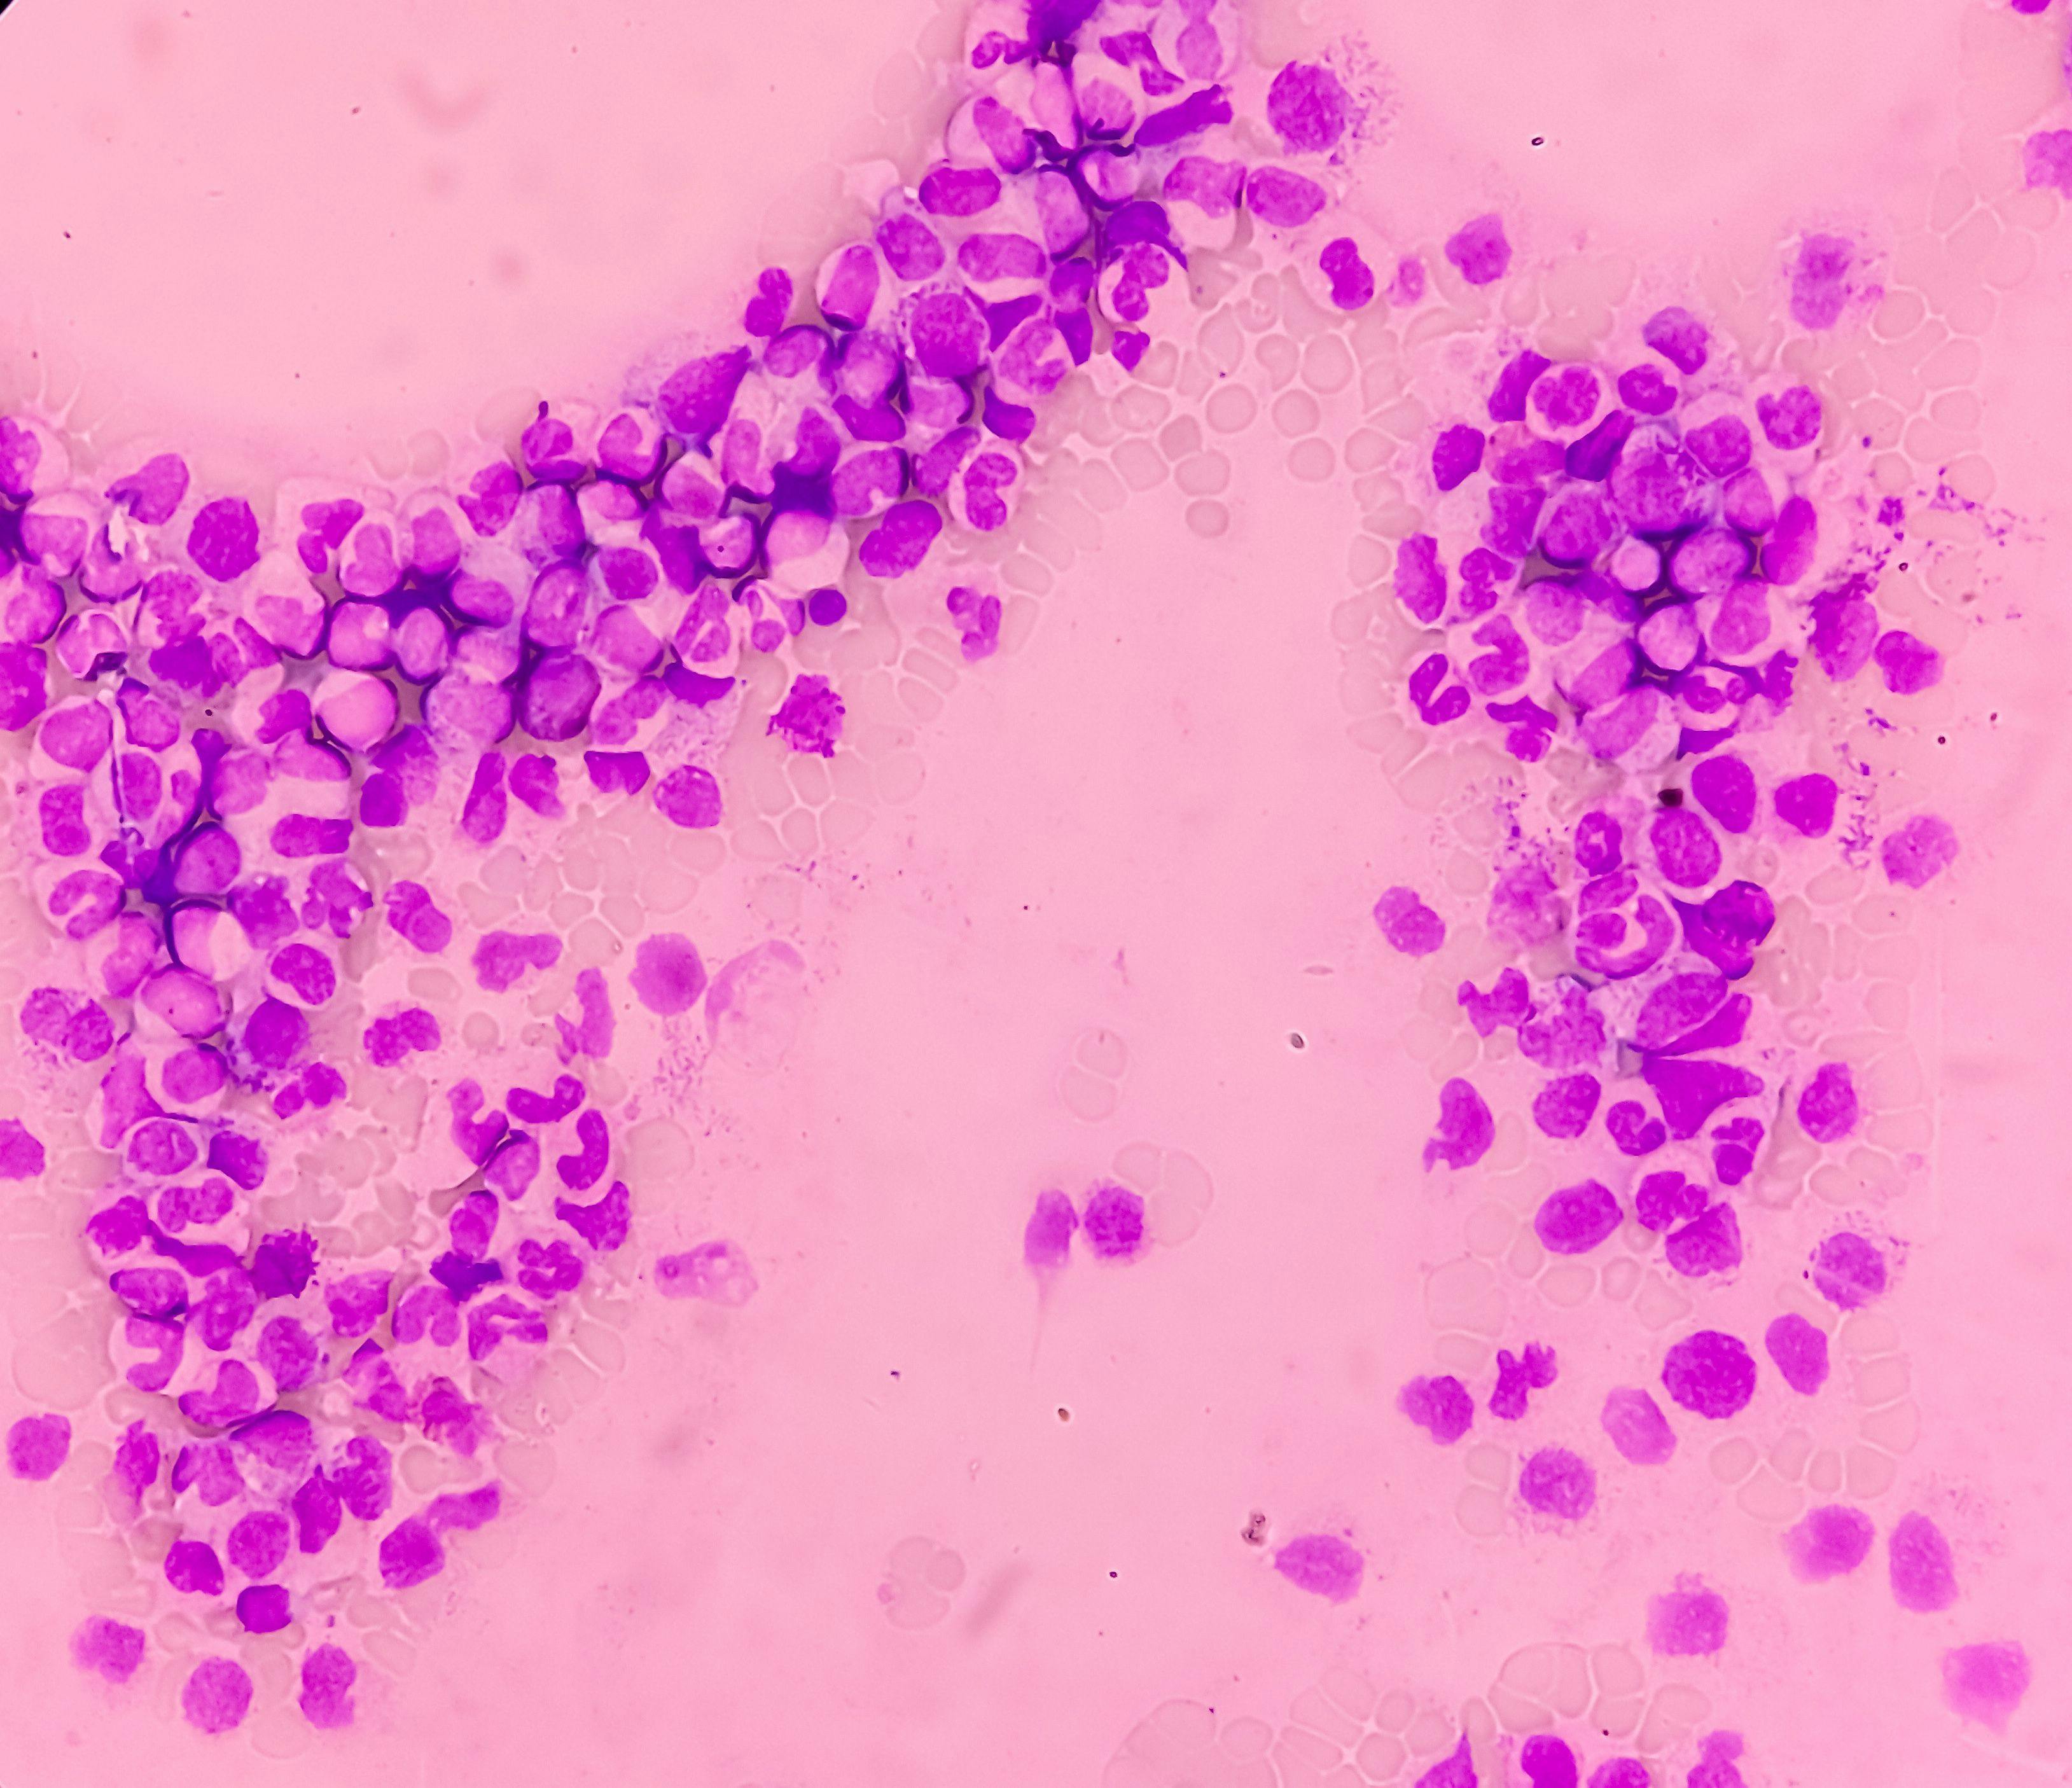 Microscopic view of chronic myeloid leukemia cells